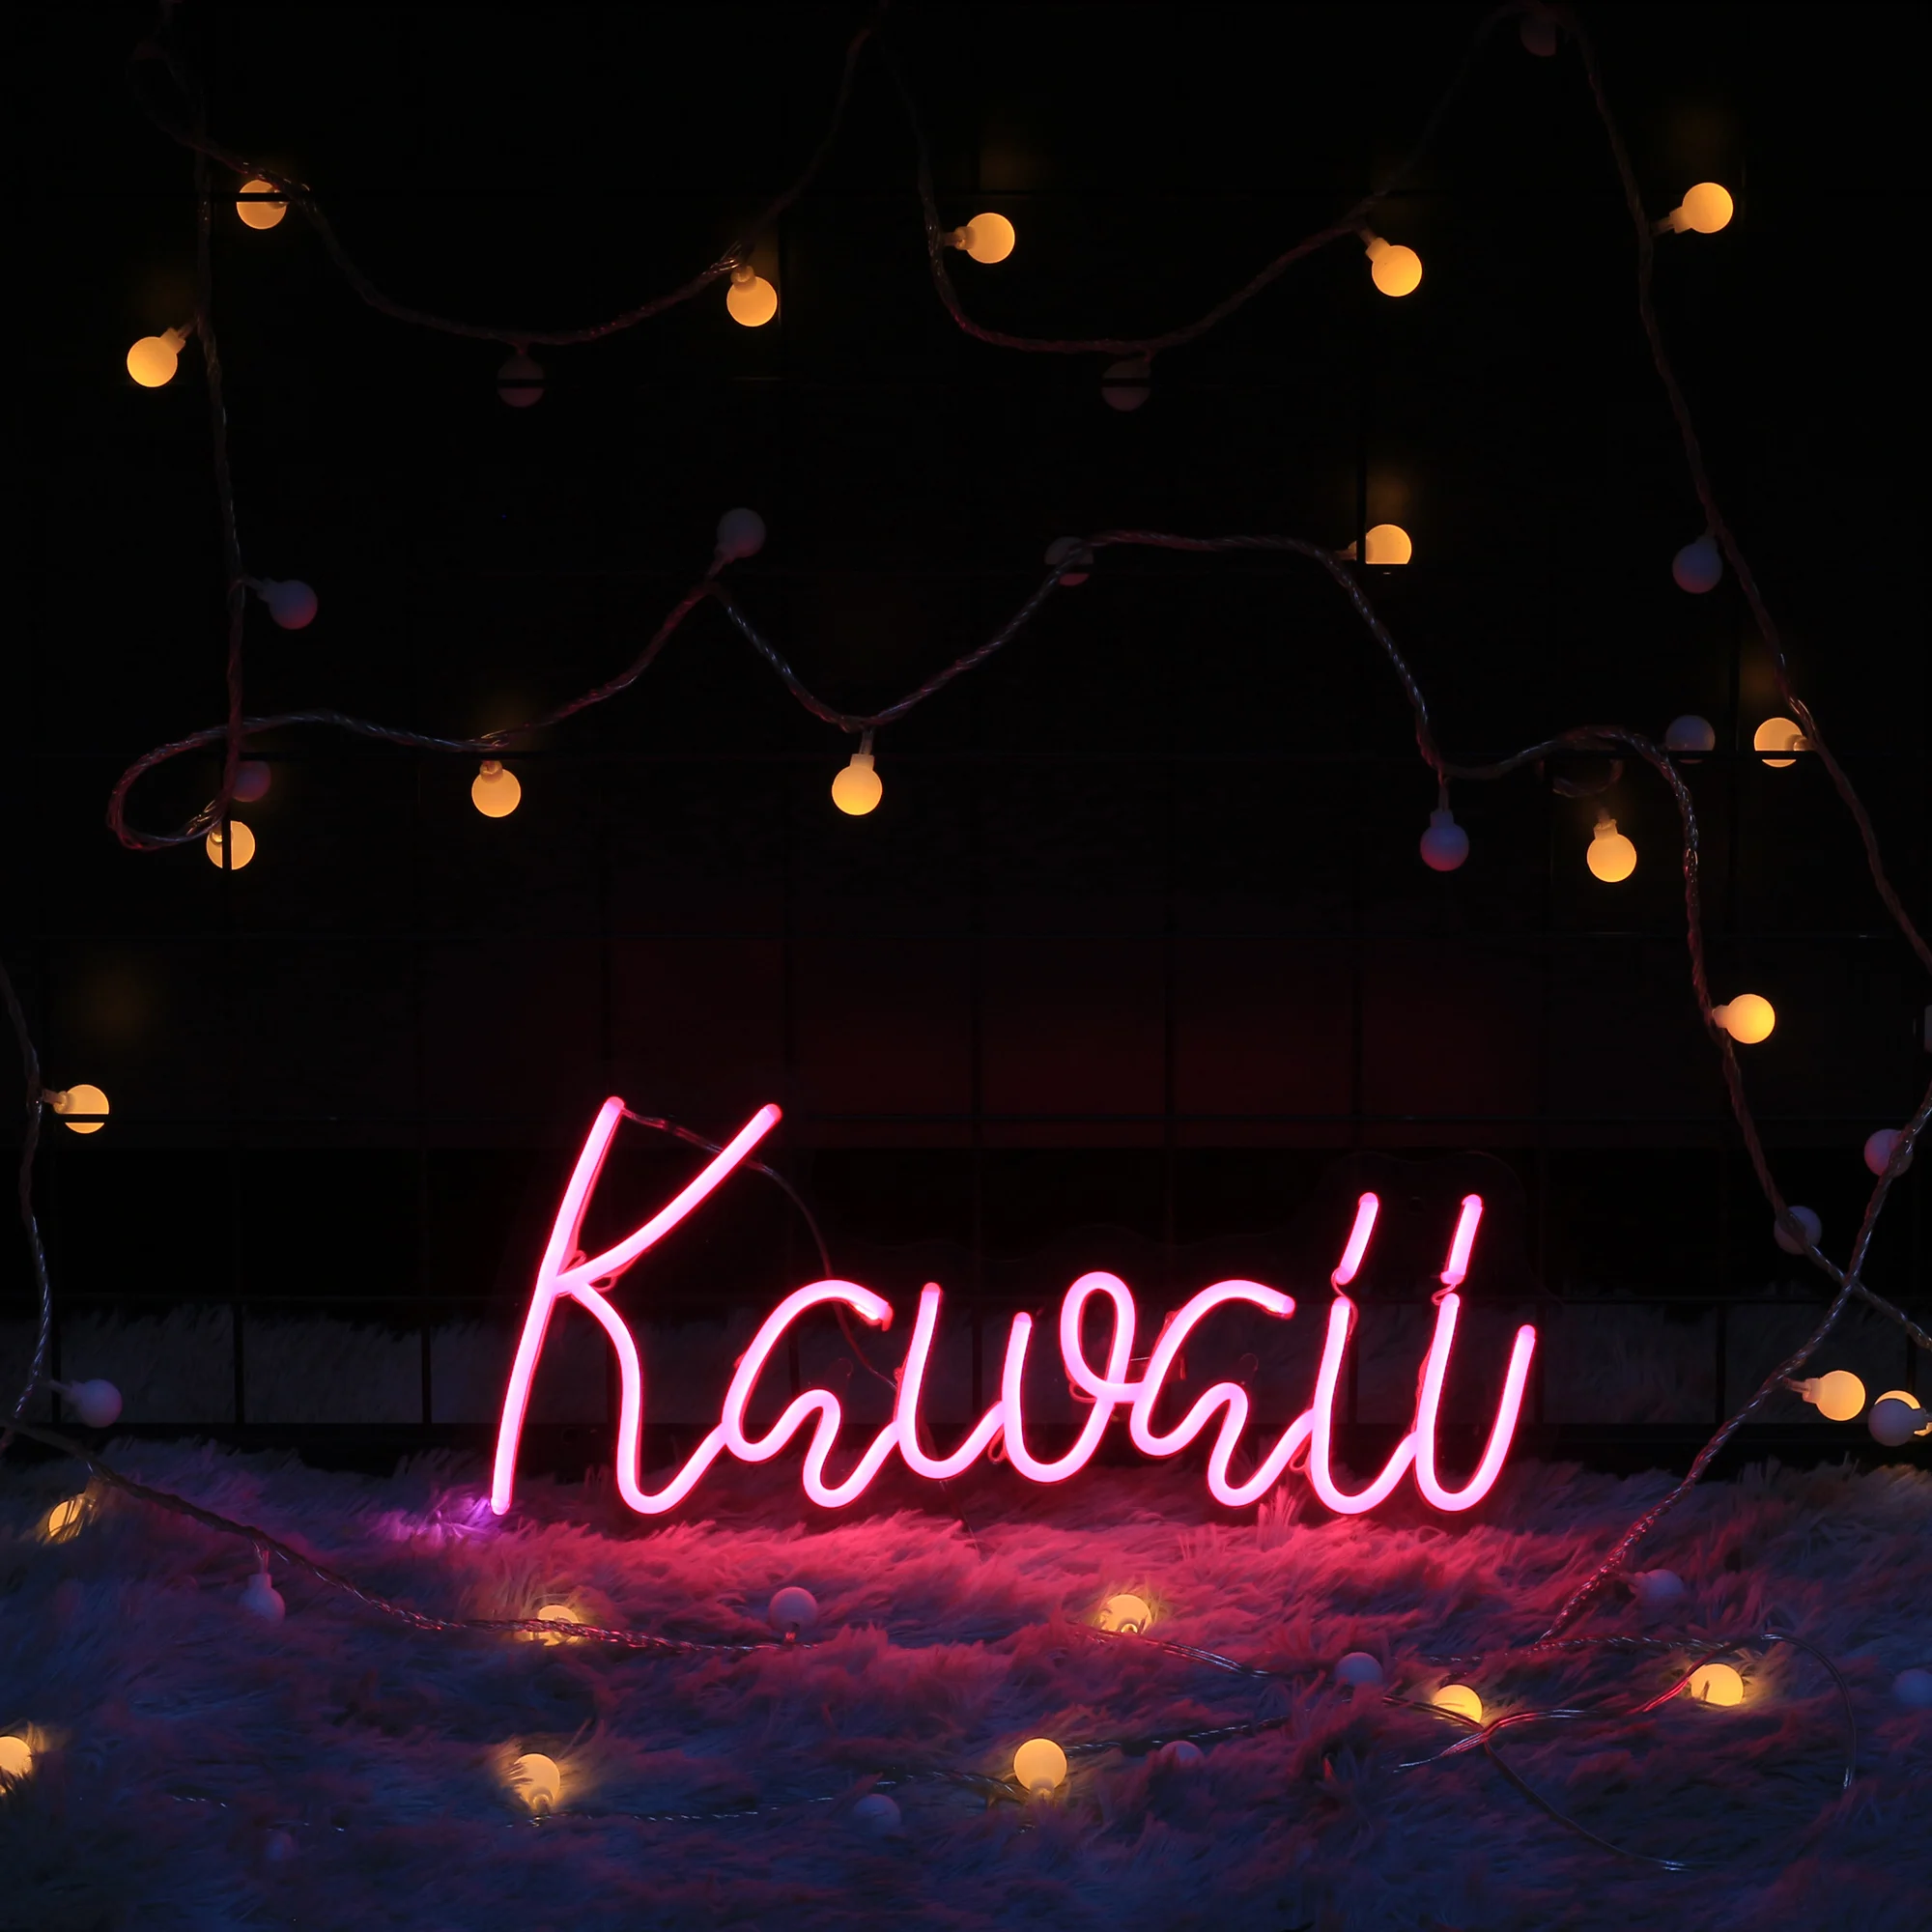 Custom Kawaii Sign LED Neon Light Sign Lamp Neon Wall Light Night Lamp for Room Holiday Party Decor Cool Birthday Christmas Gift